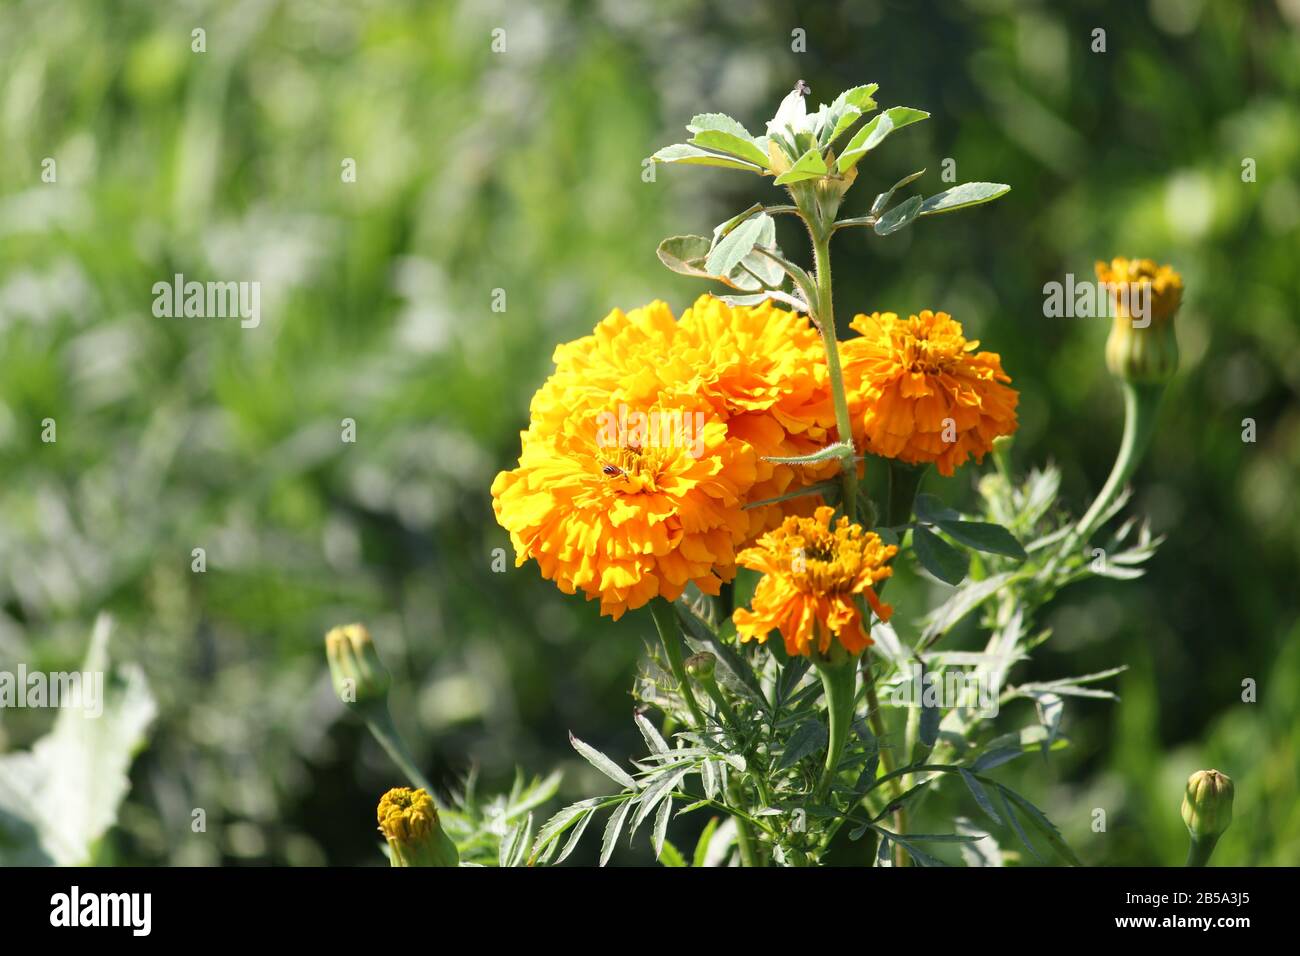 Marigold flower close up Stock Photo